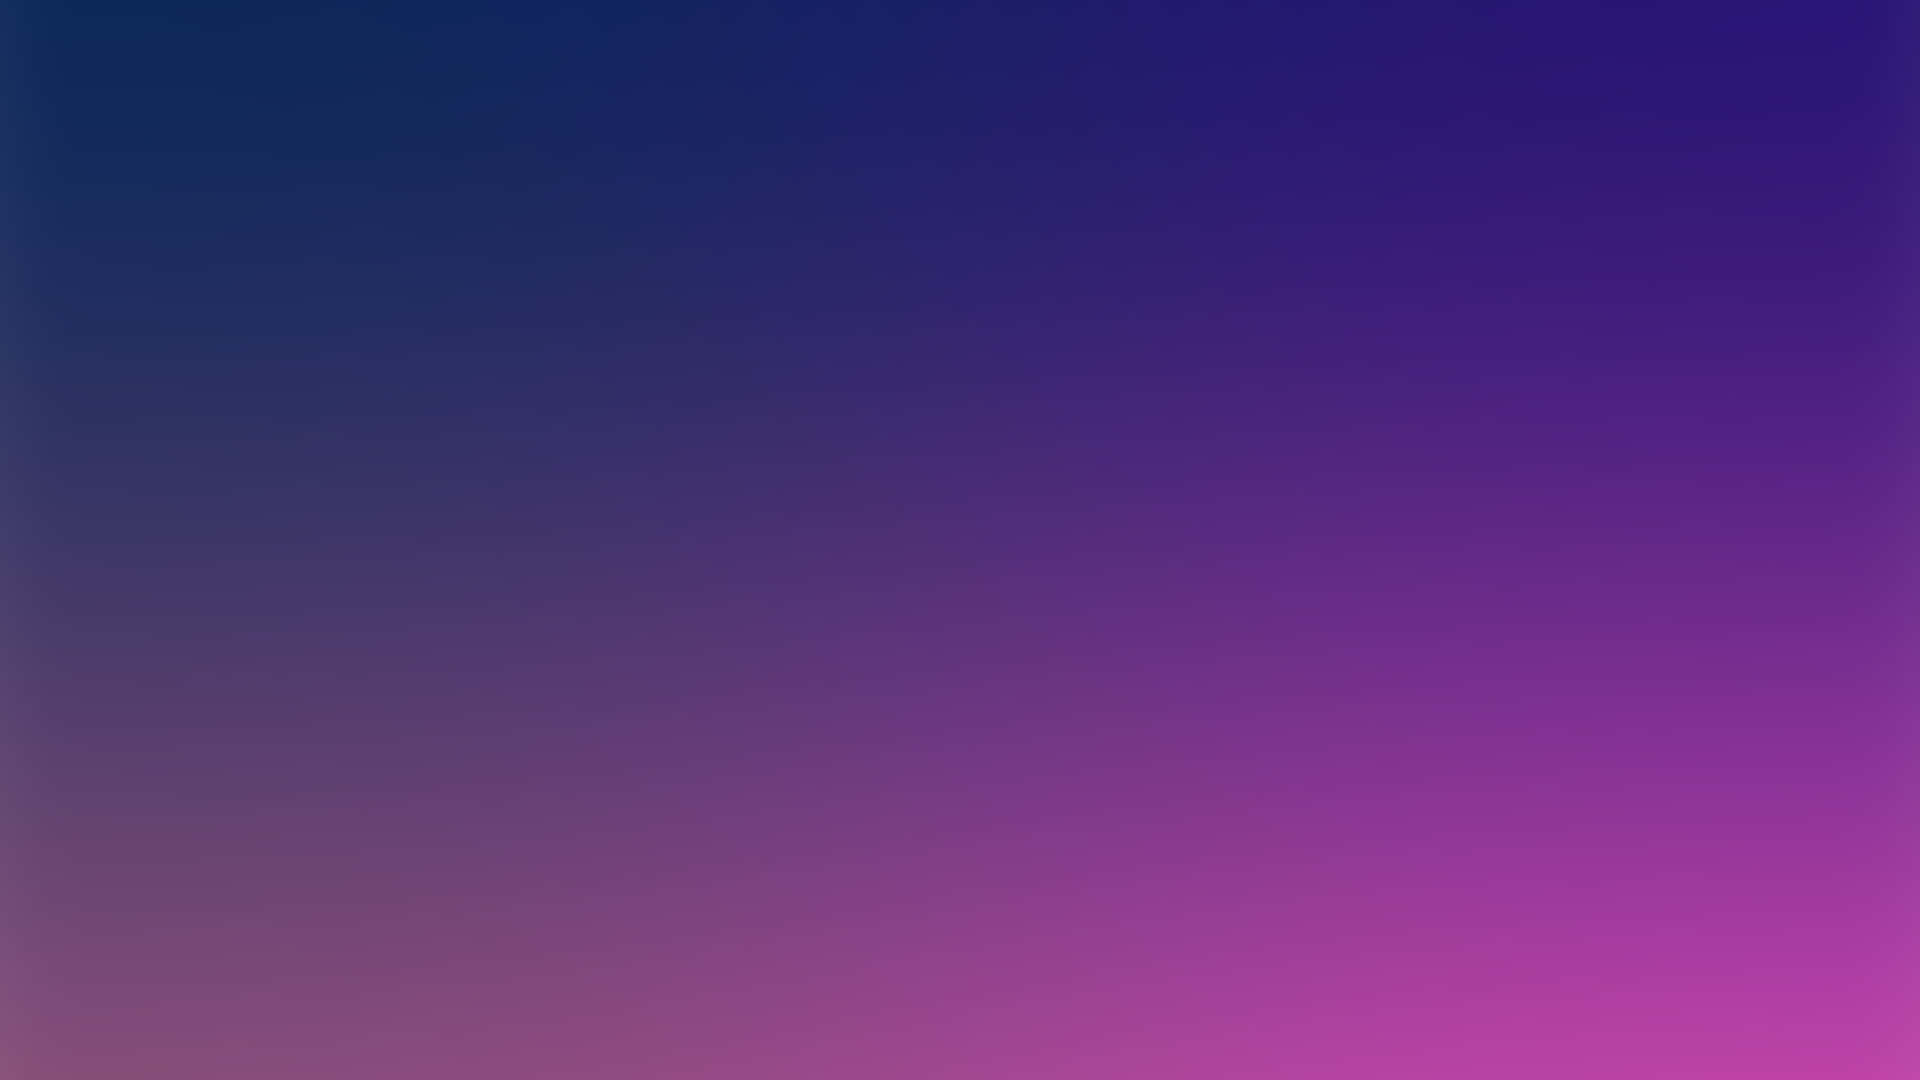 Vibrant Blue and Purple Desktop Wallpaper